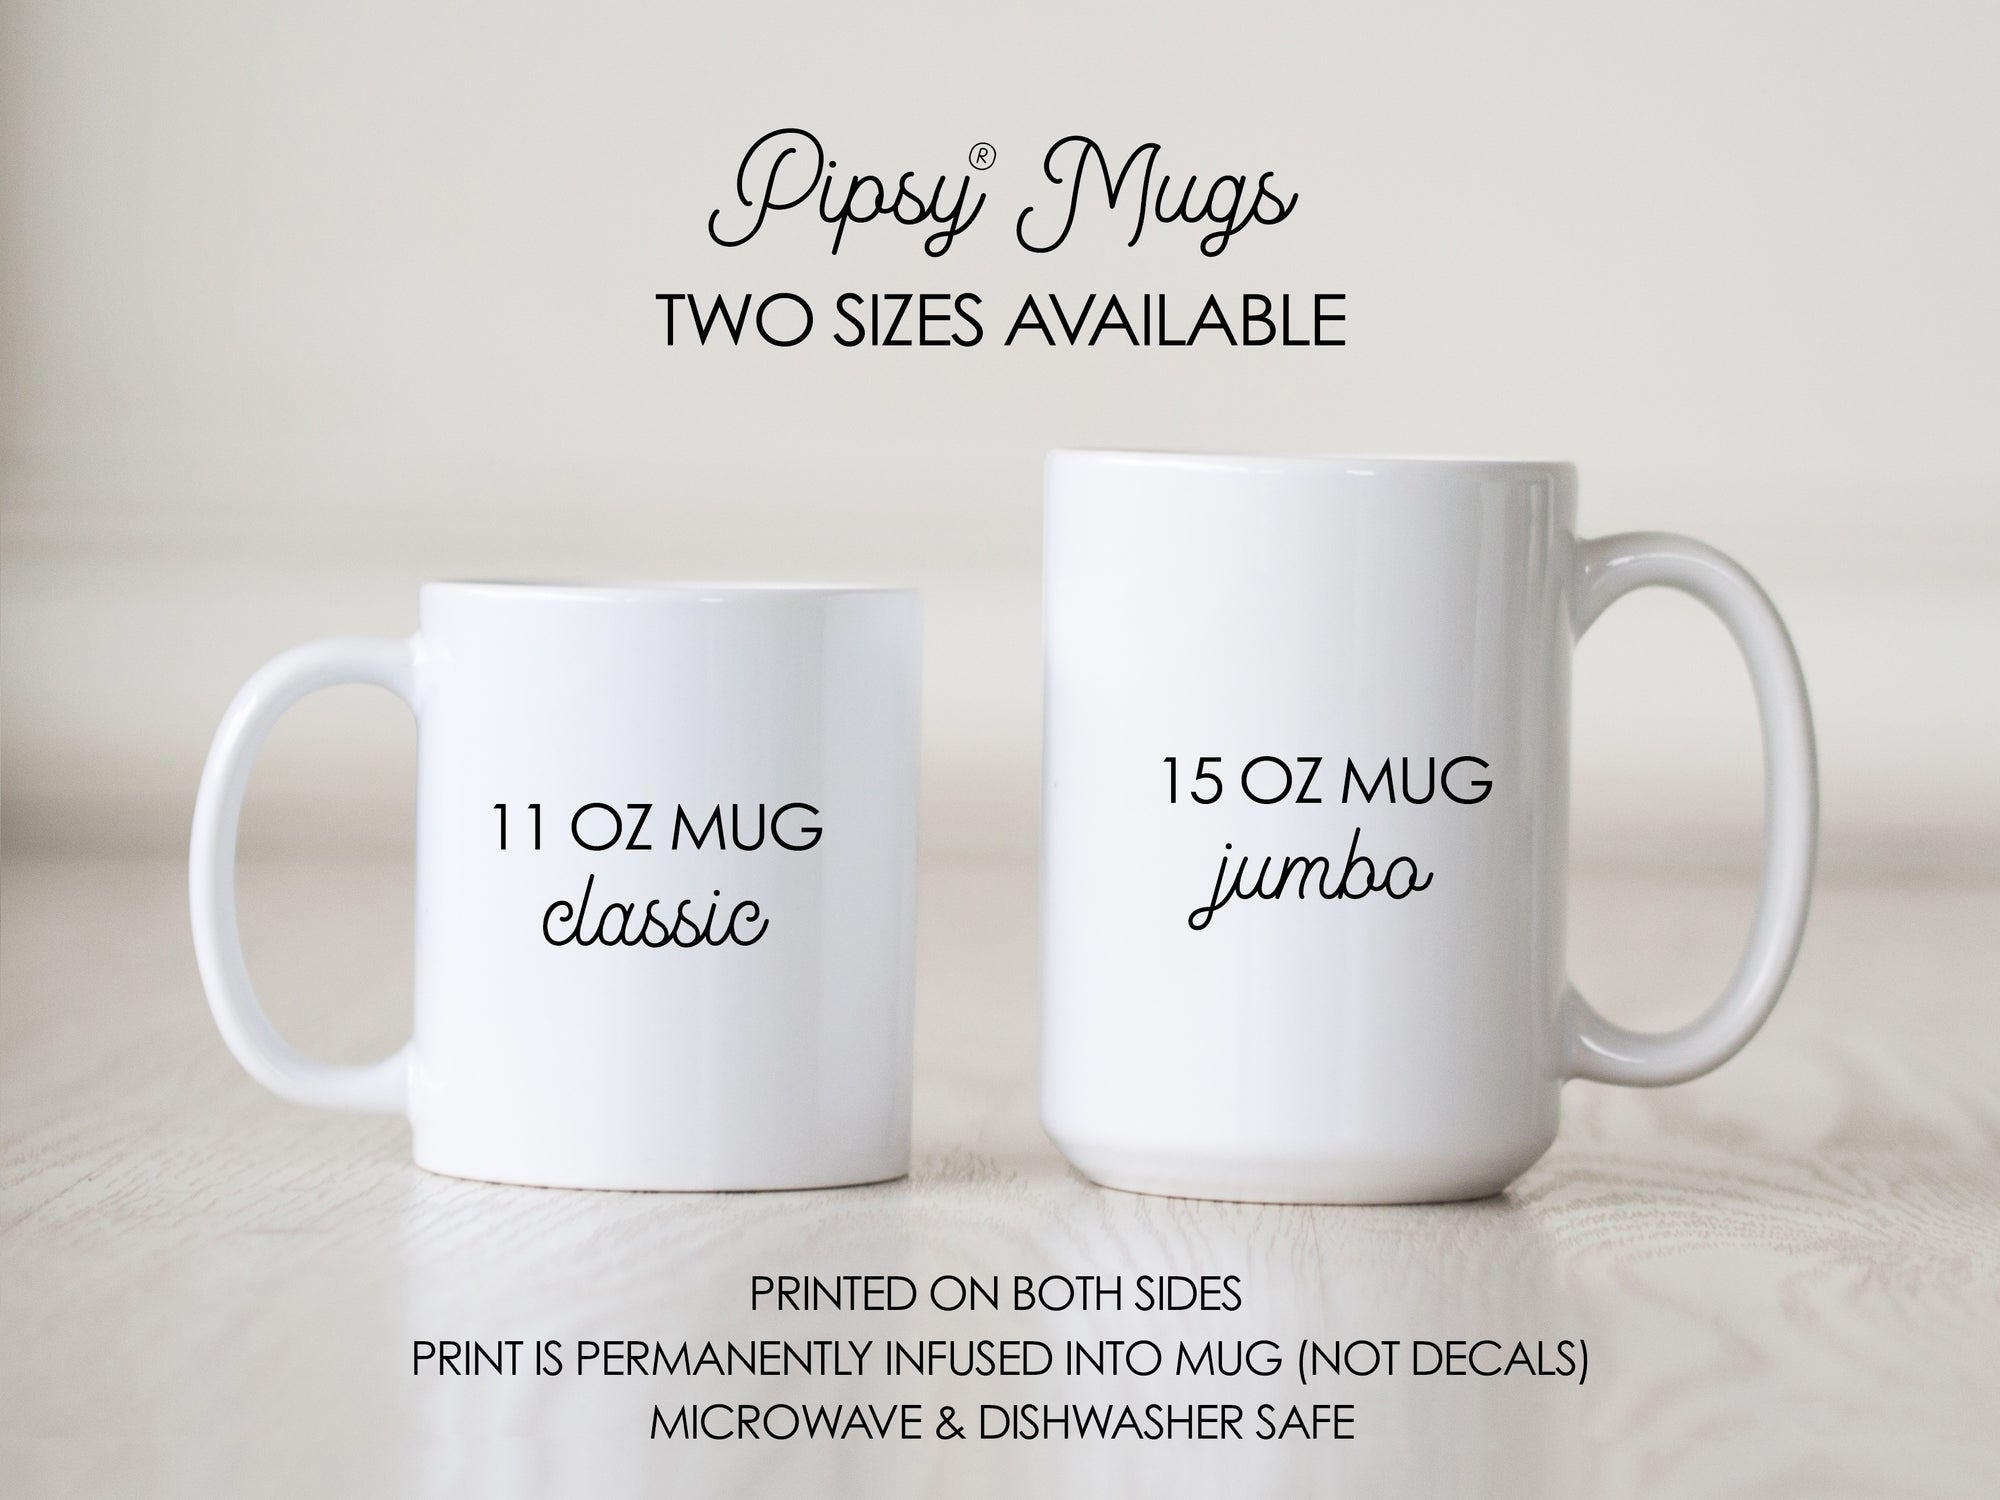 Be Still and Know Coffee Mug